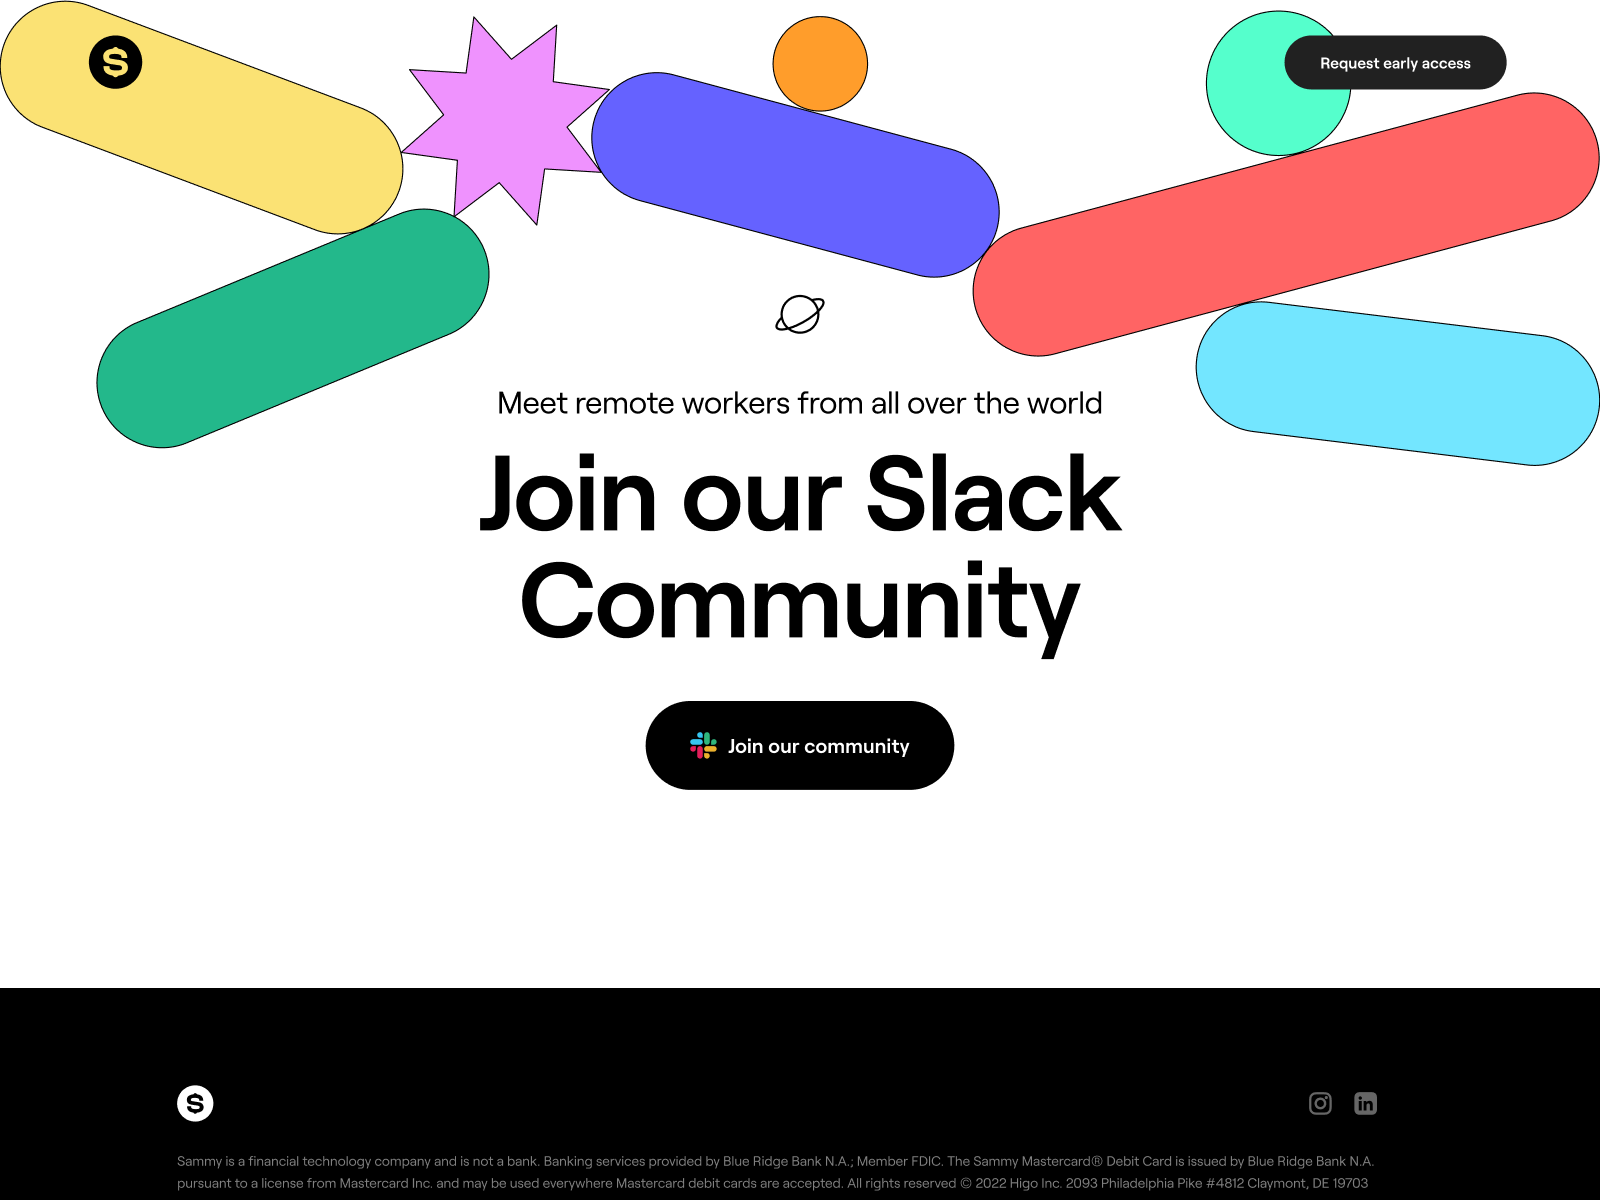 Slack Community